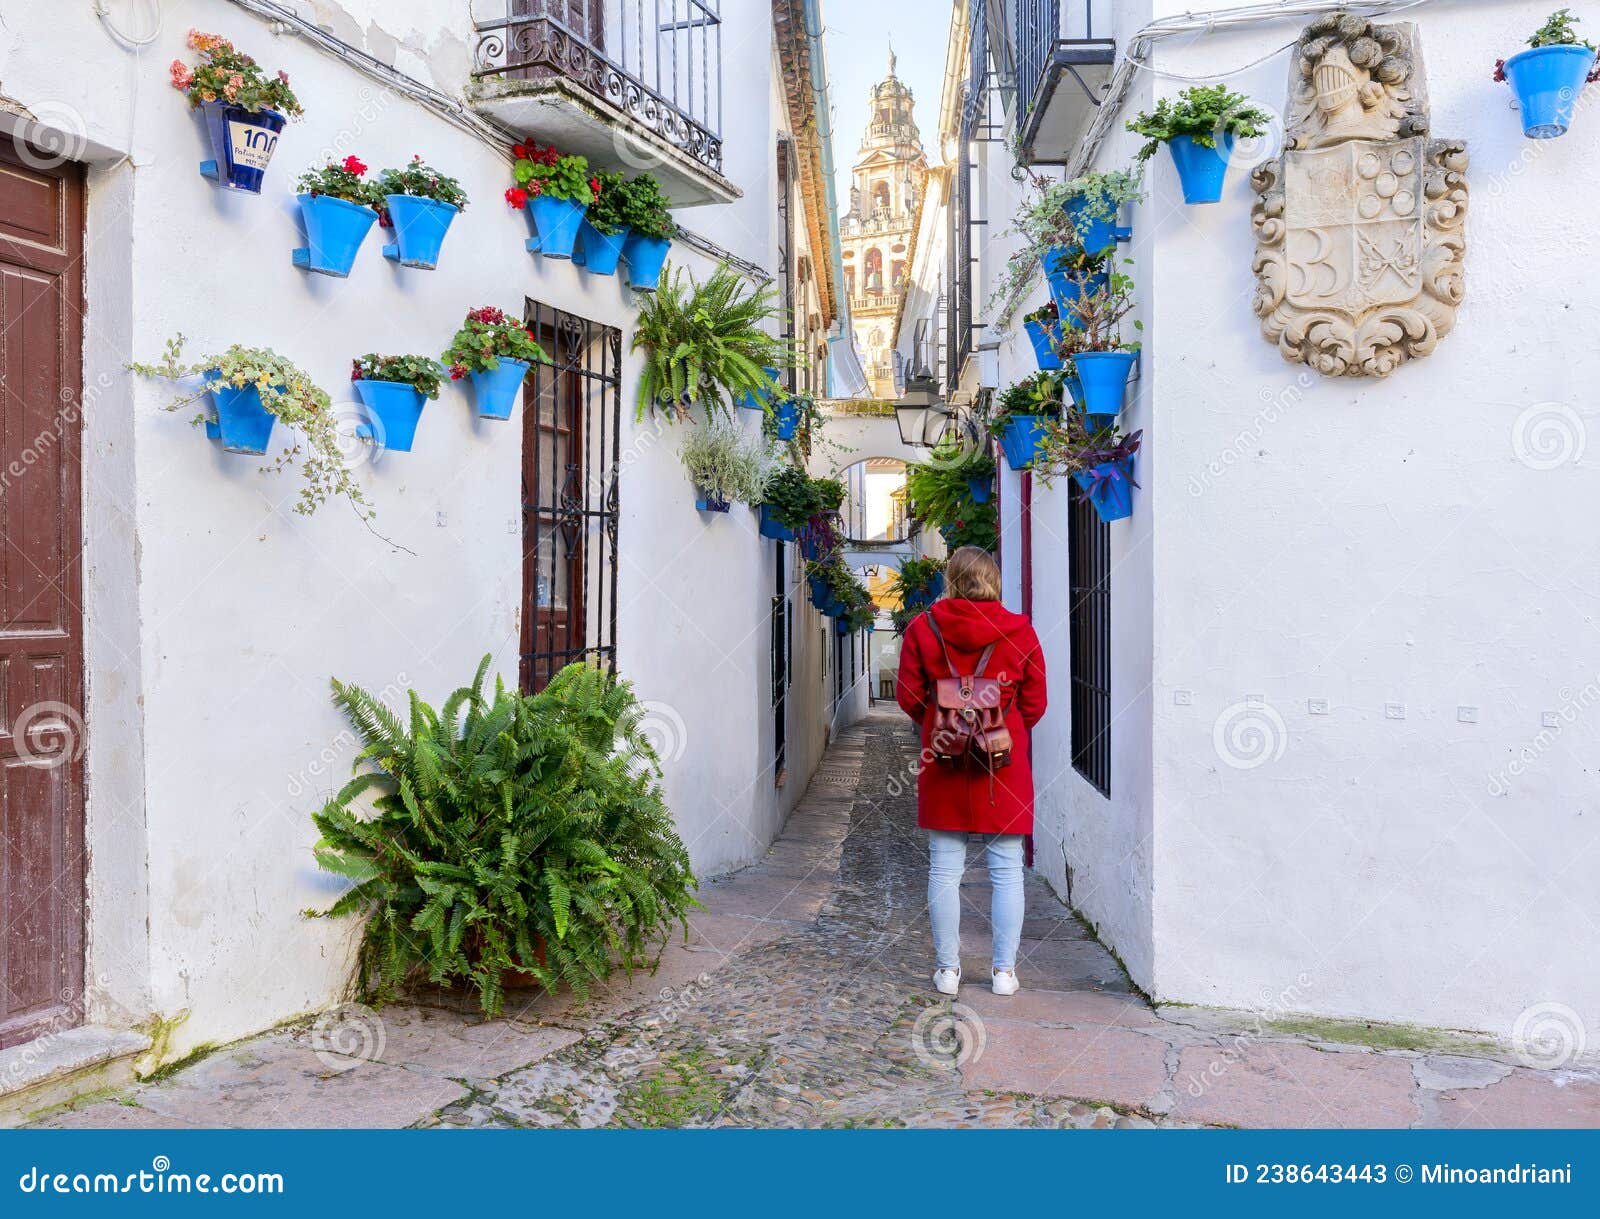 cordoba, spain. beautiful girl dressed in red looking at calleja de las flores, a famous narrow street in cordoba, spain during